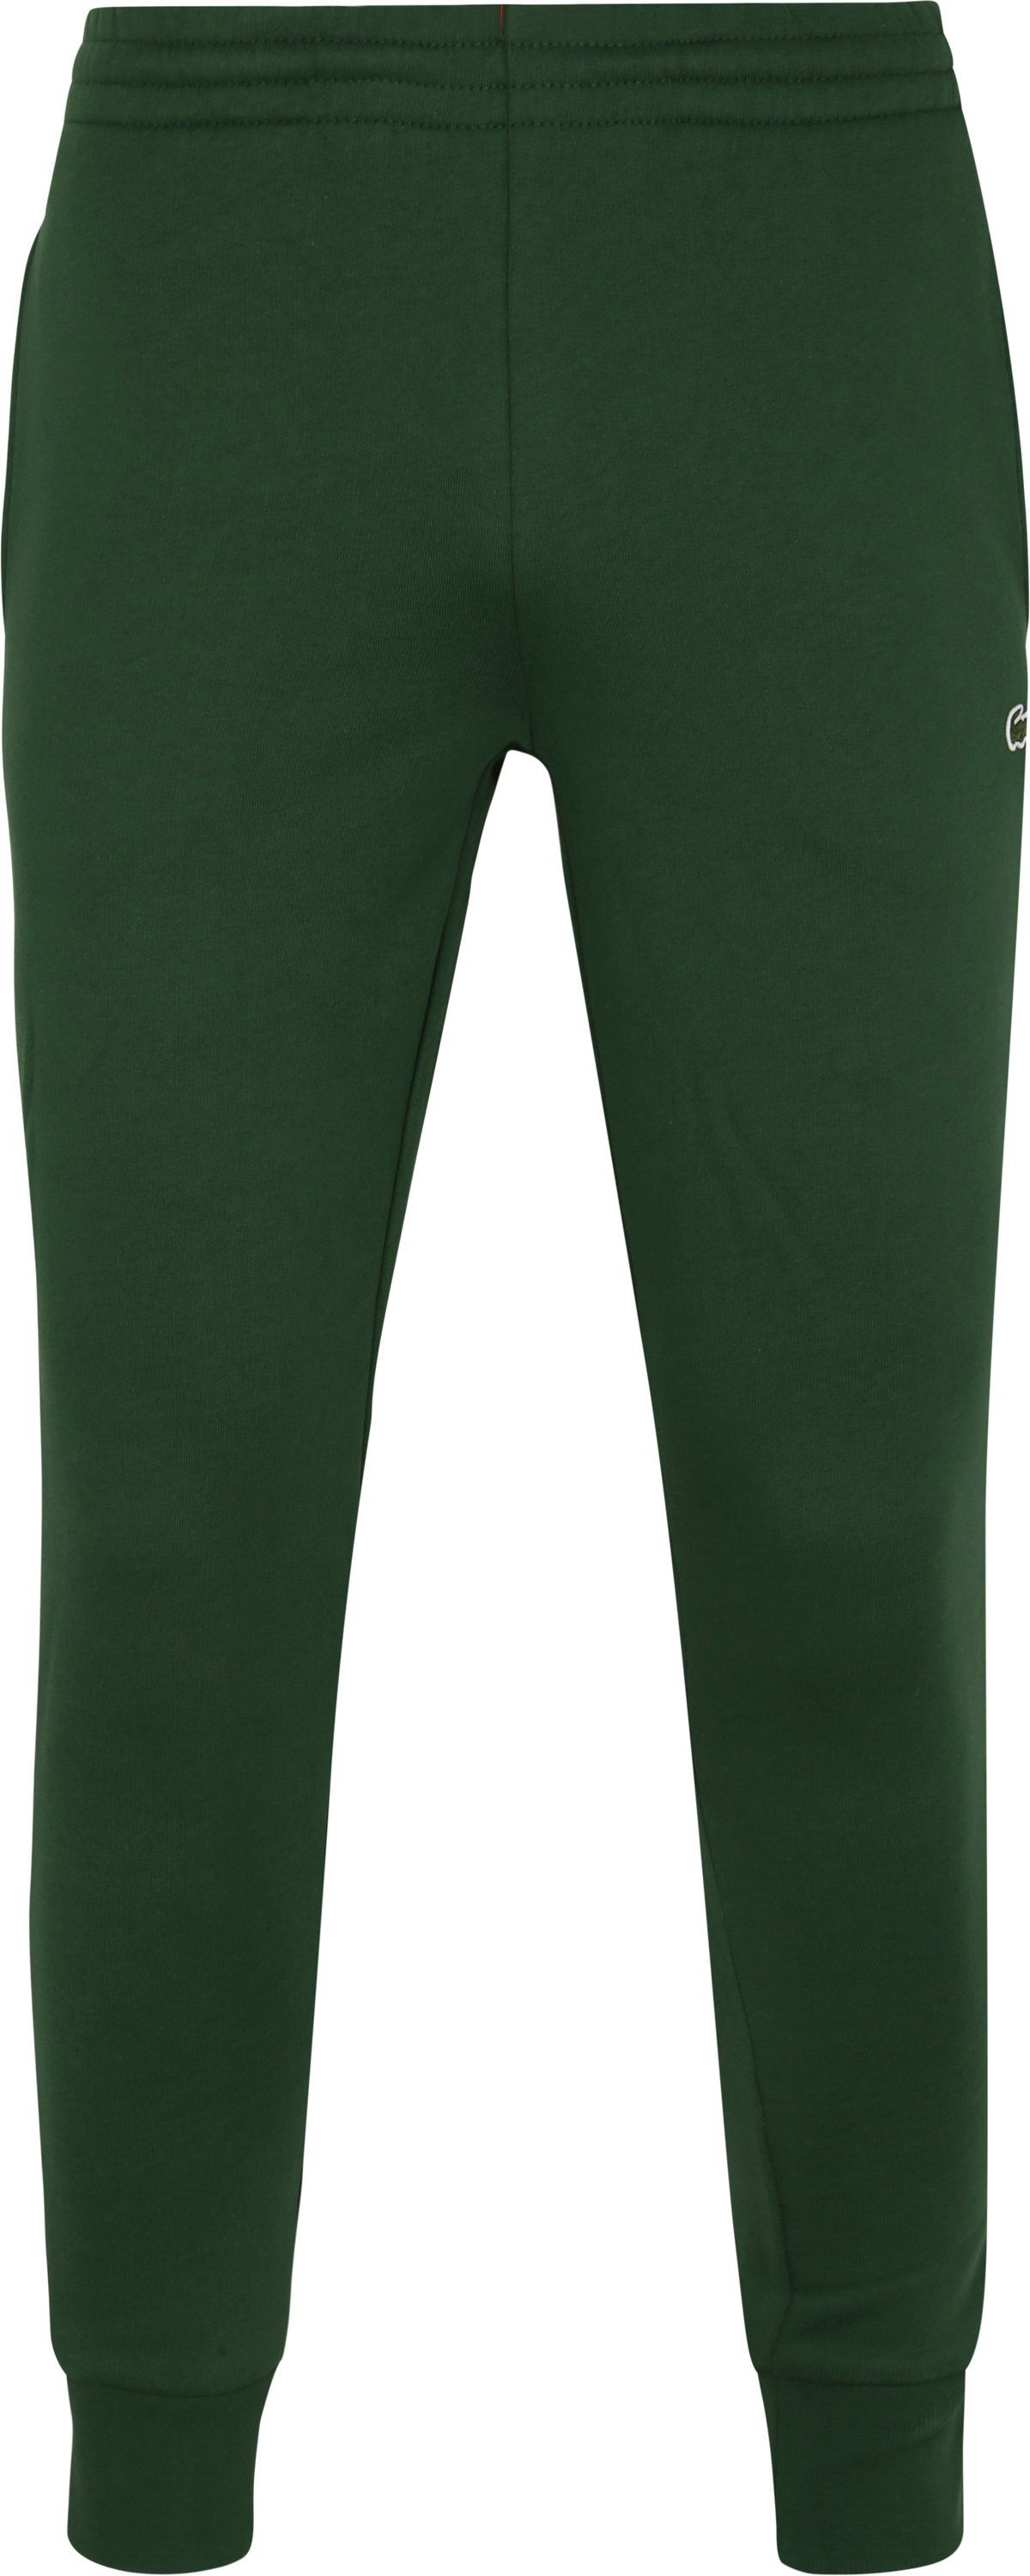 Lacoste Sweatpants Dark Green Dark Green size L